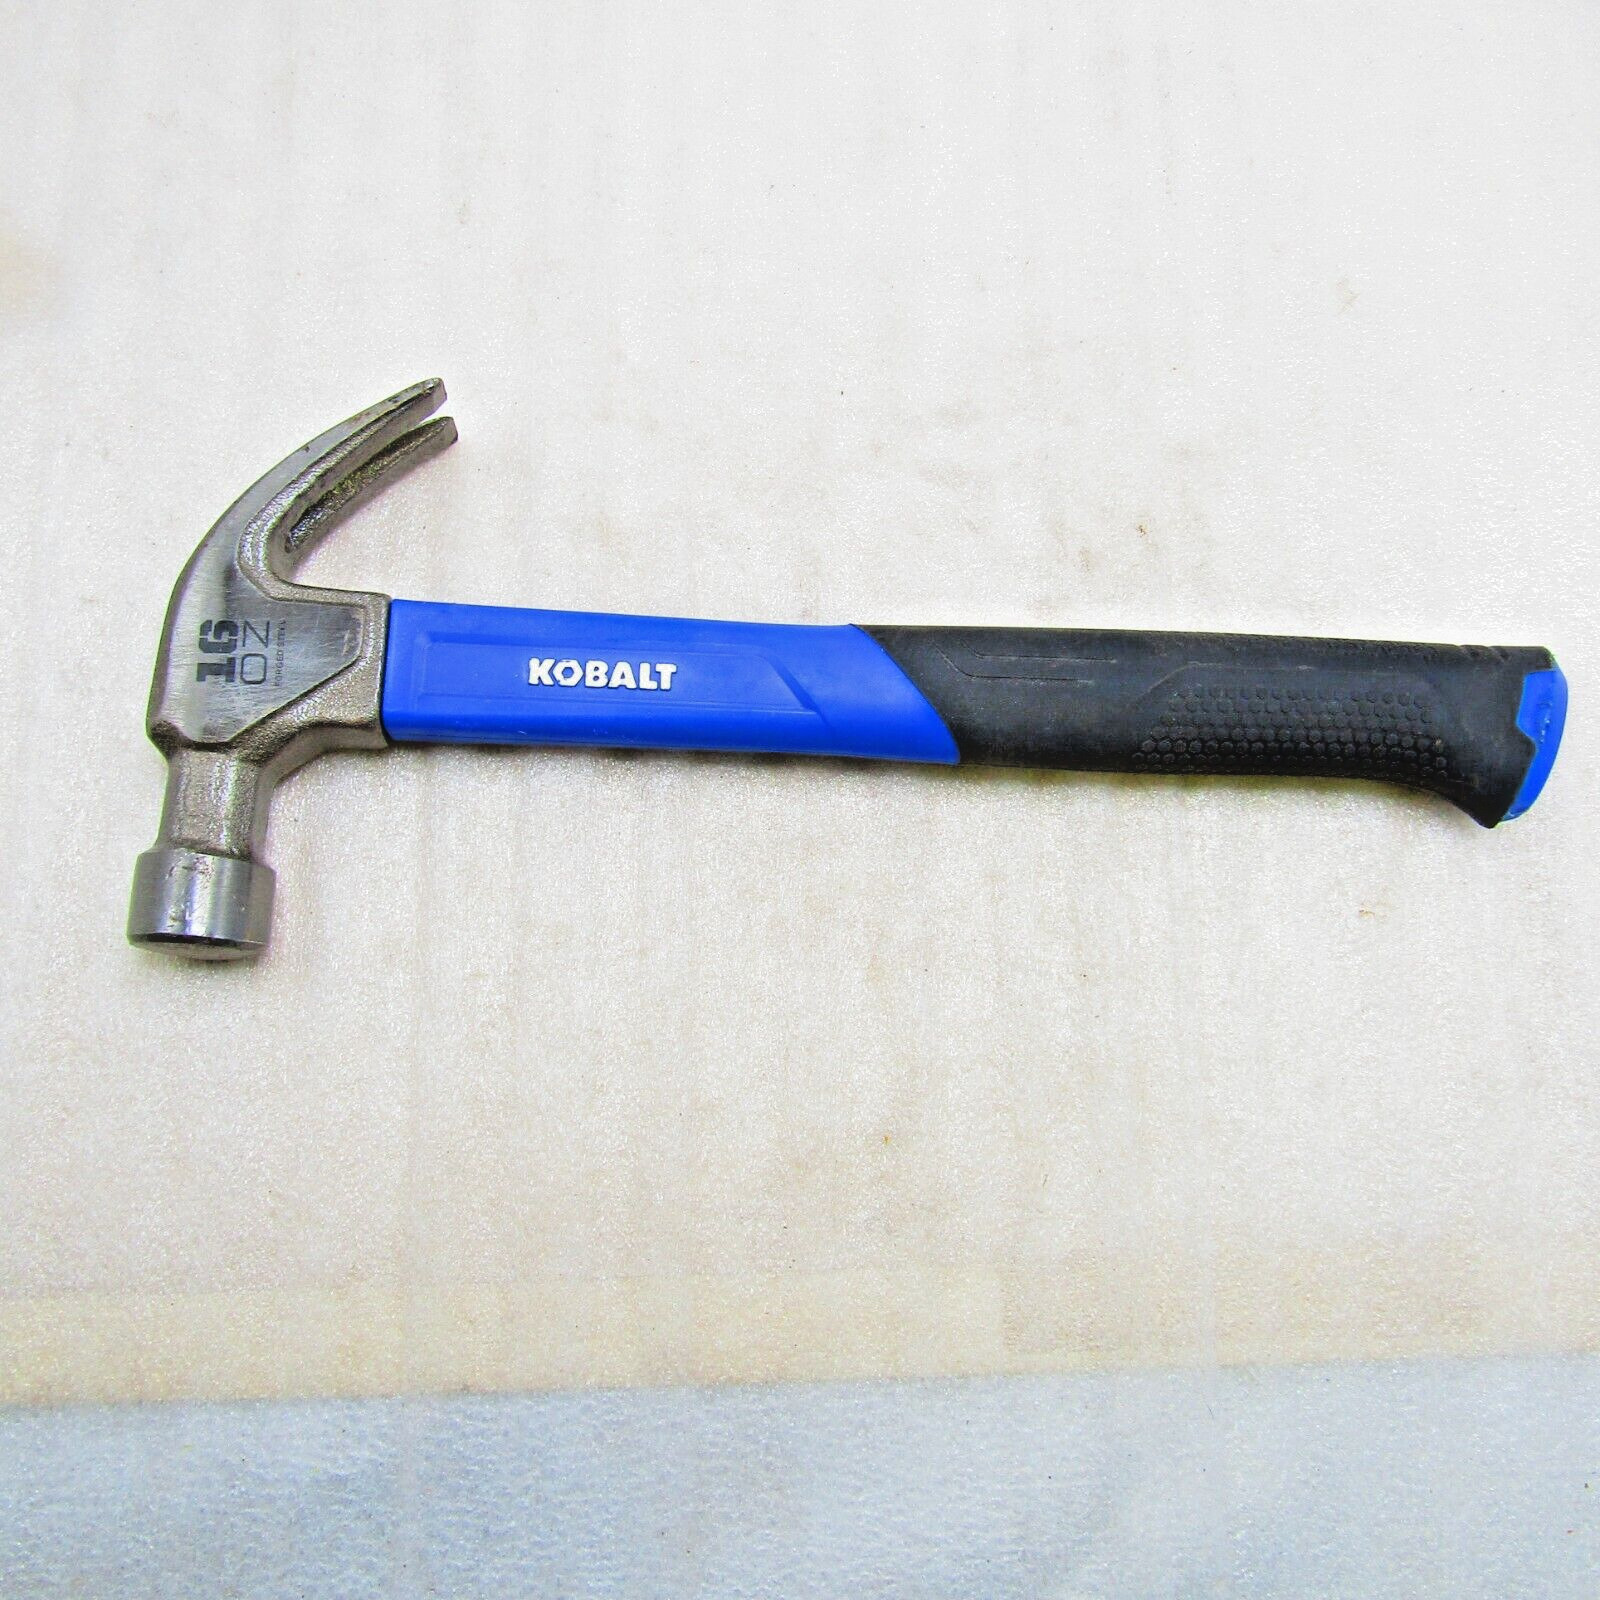 Carpenters claw hammer by Kobalt